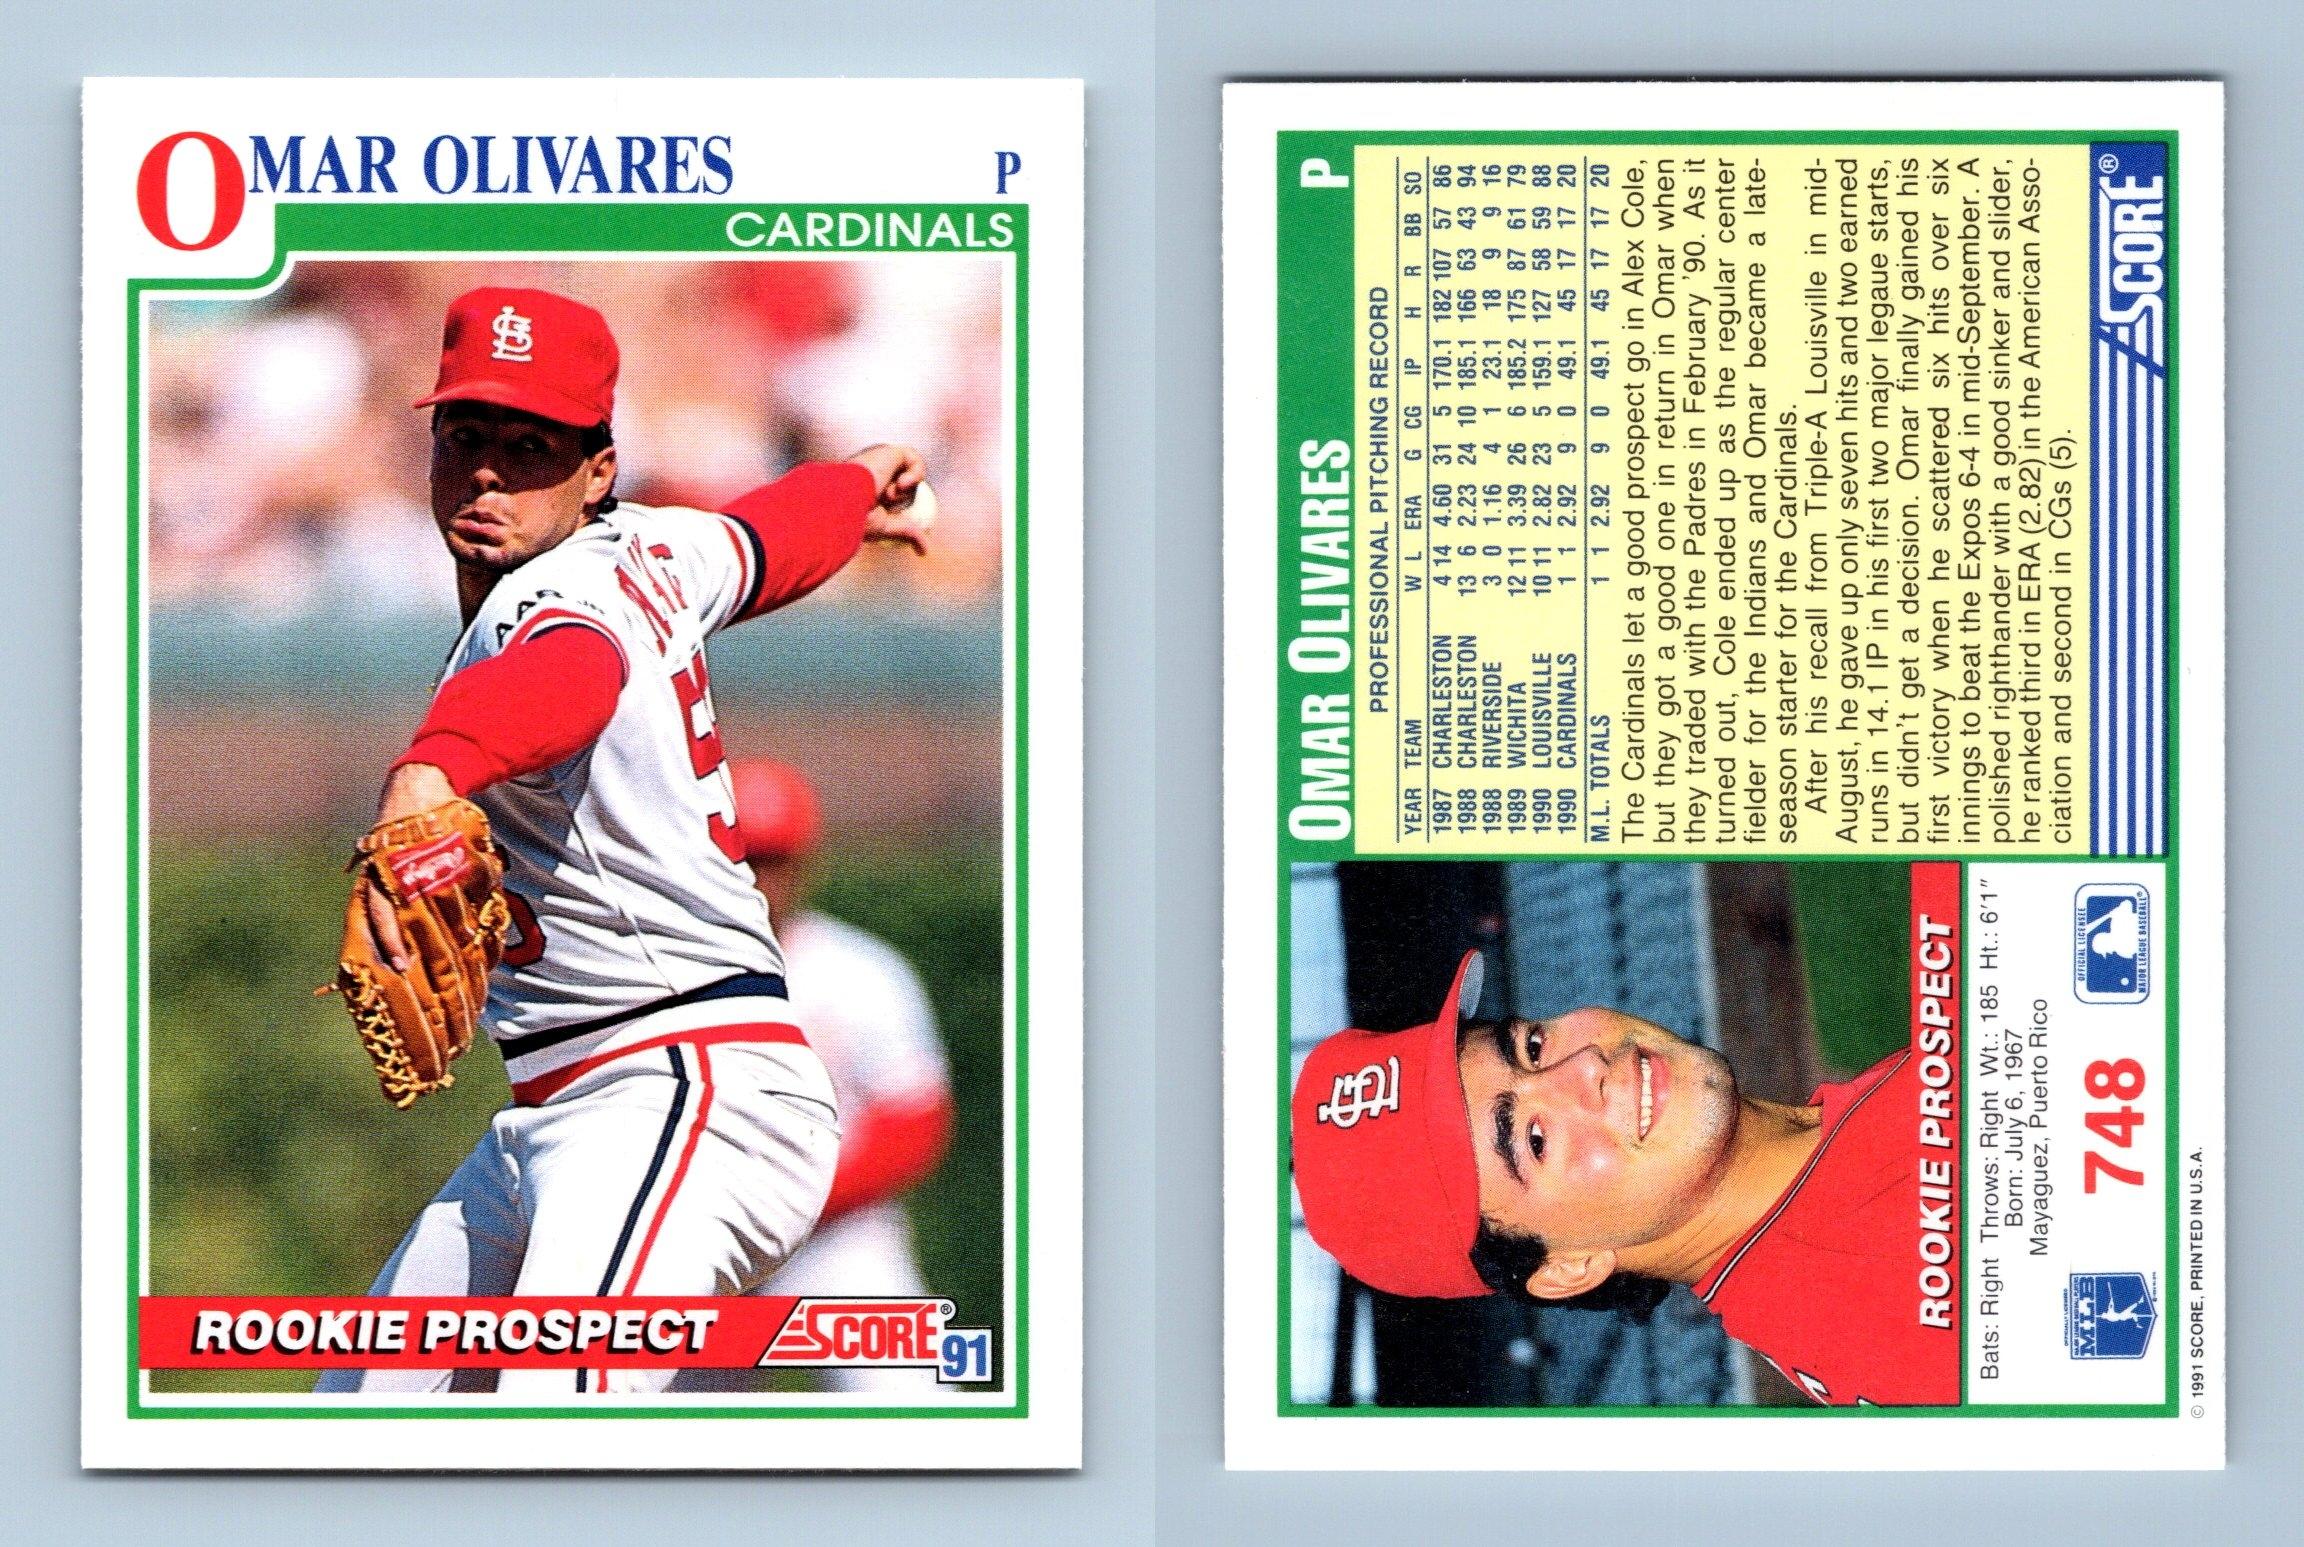 Joe Girardi - Cubs #585 Score 1991 Baseball Trading Card